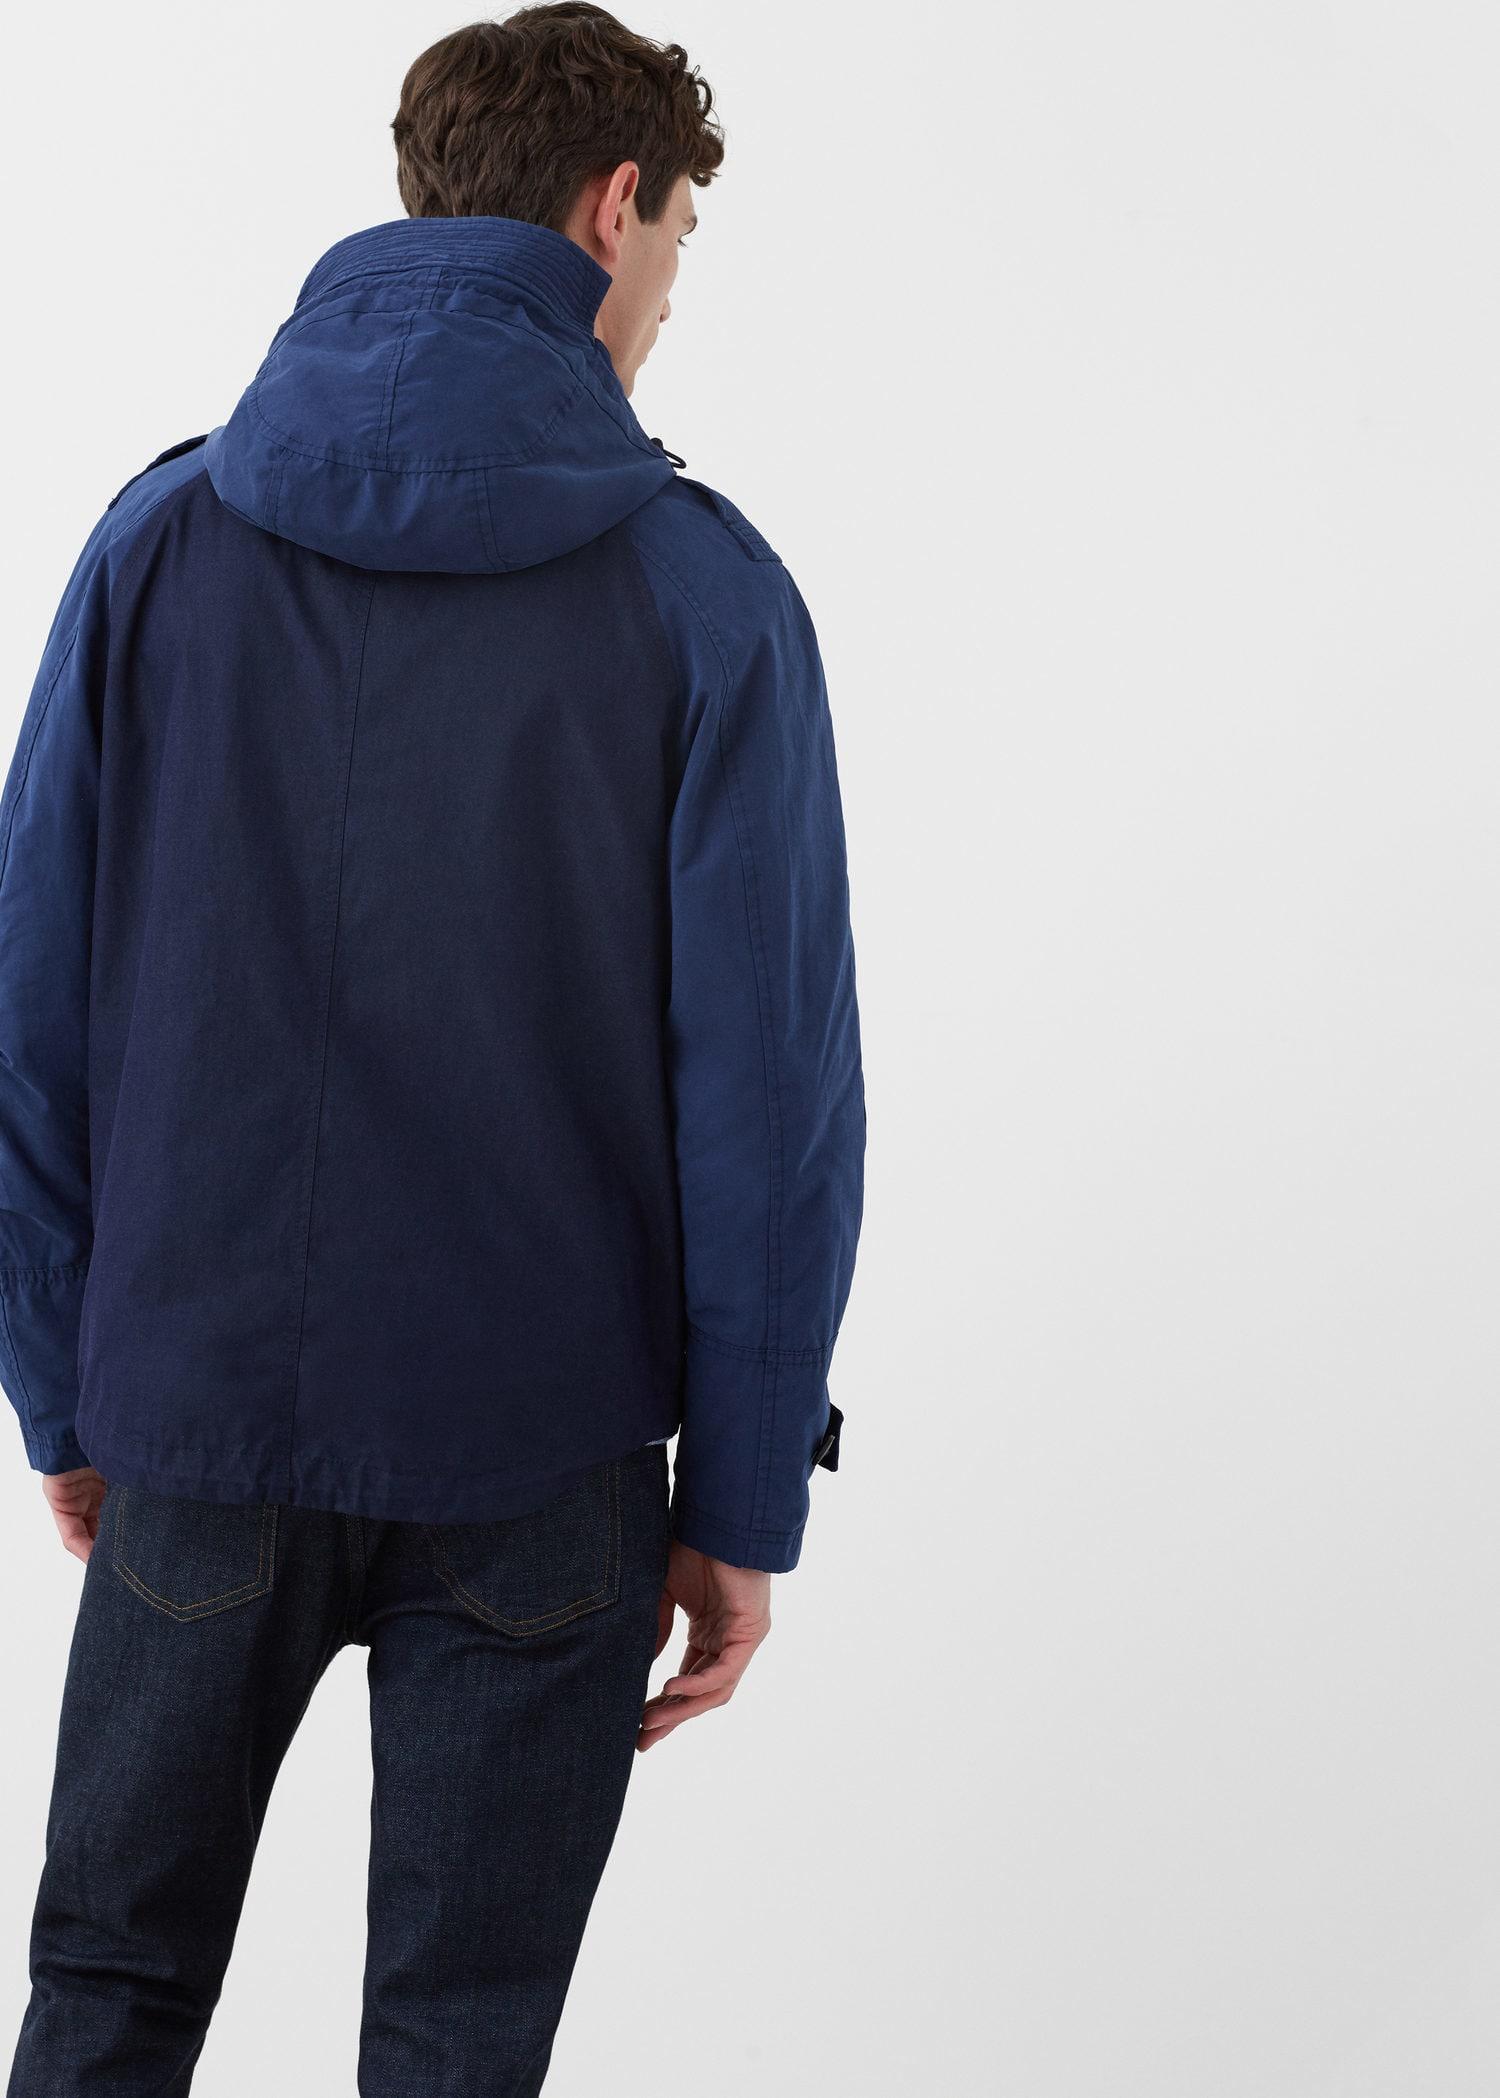 Lyst - Mango Incorporated-visor Hooded Jacket in Blue for Men